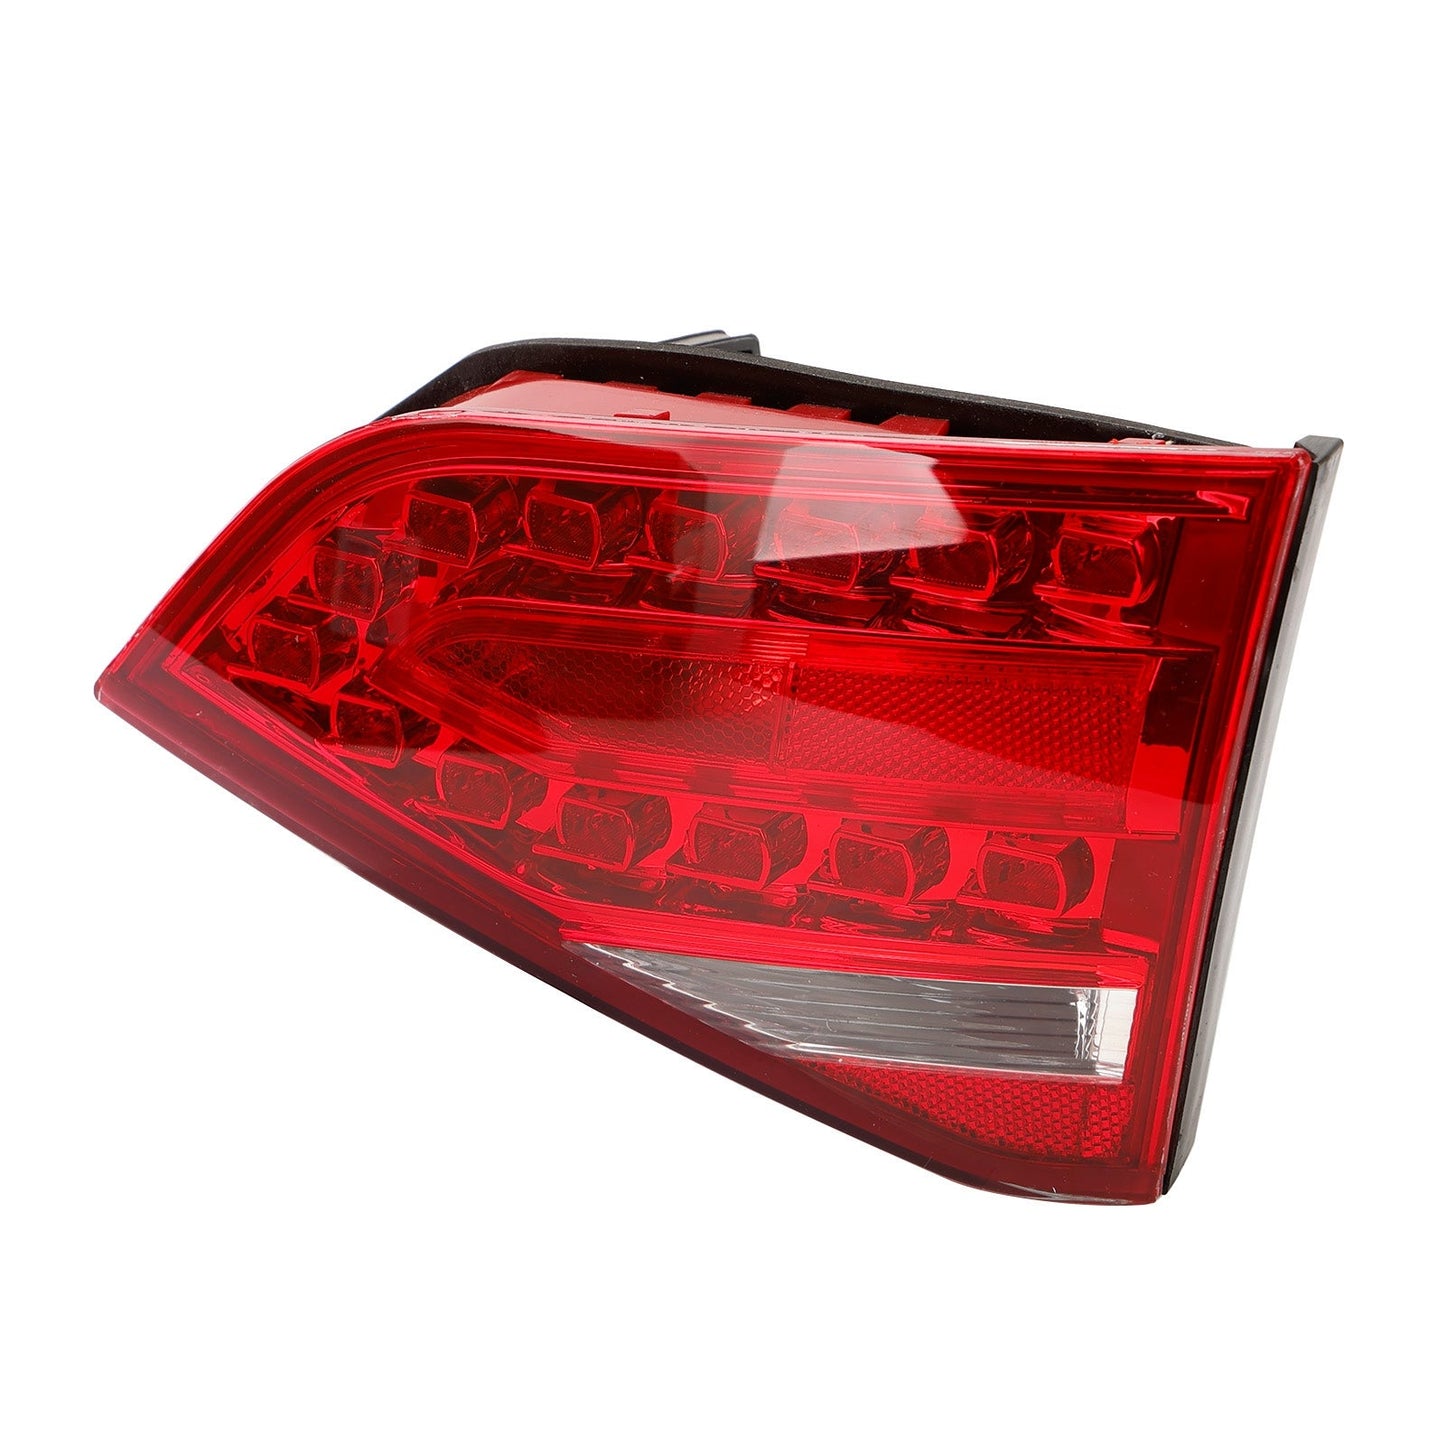 2009-2012 Audi A4 Right Inner Trunk LED Tail Light Lamp